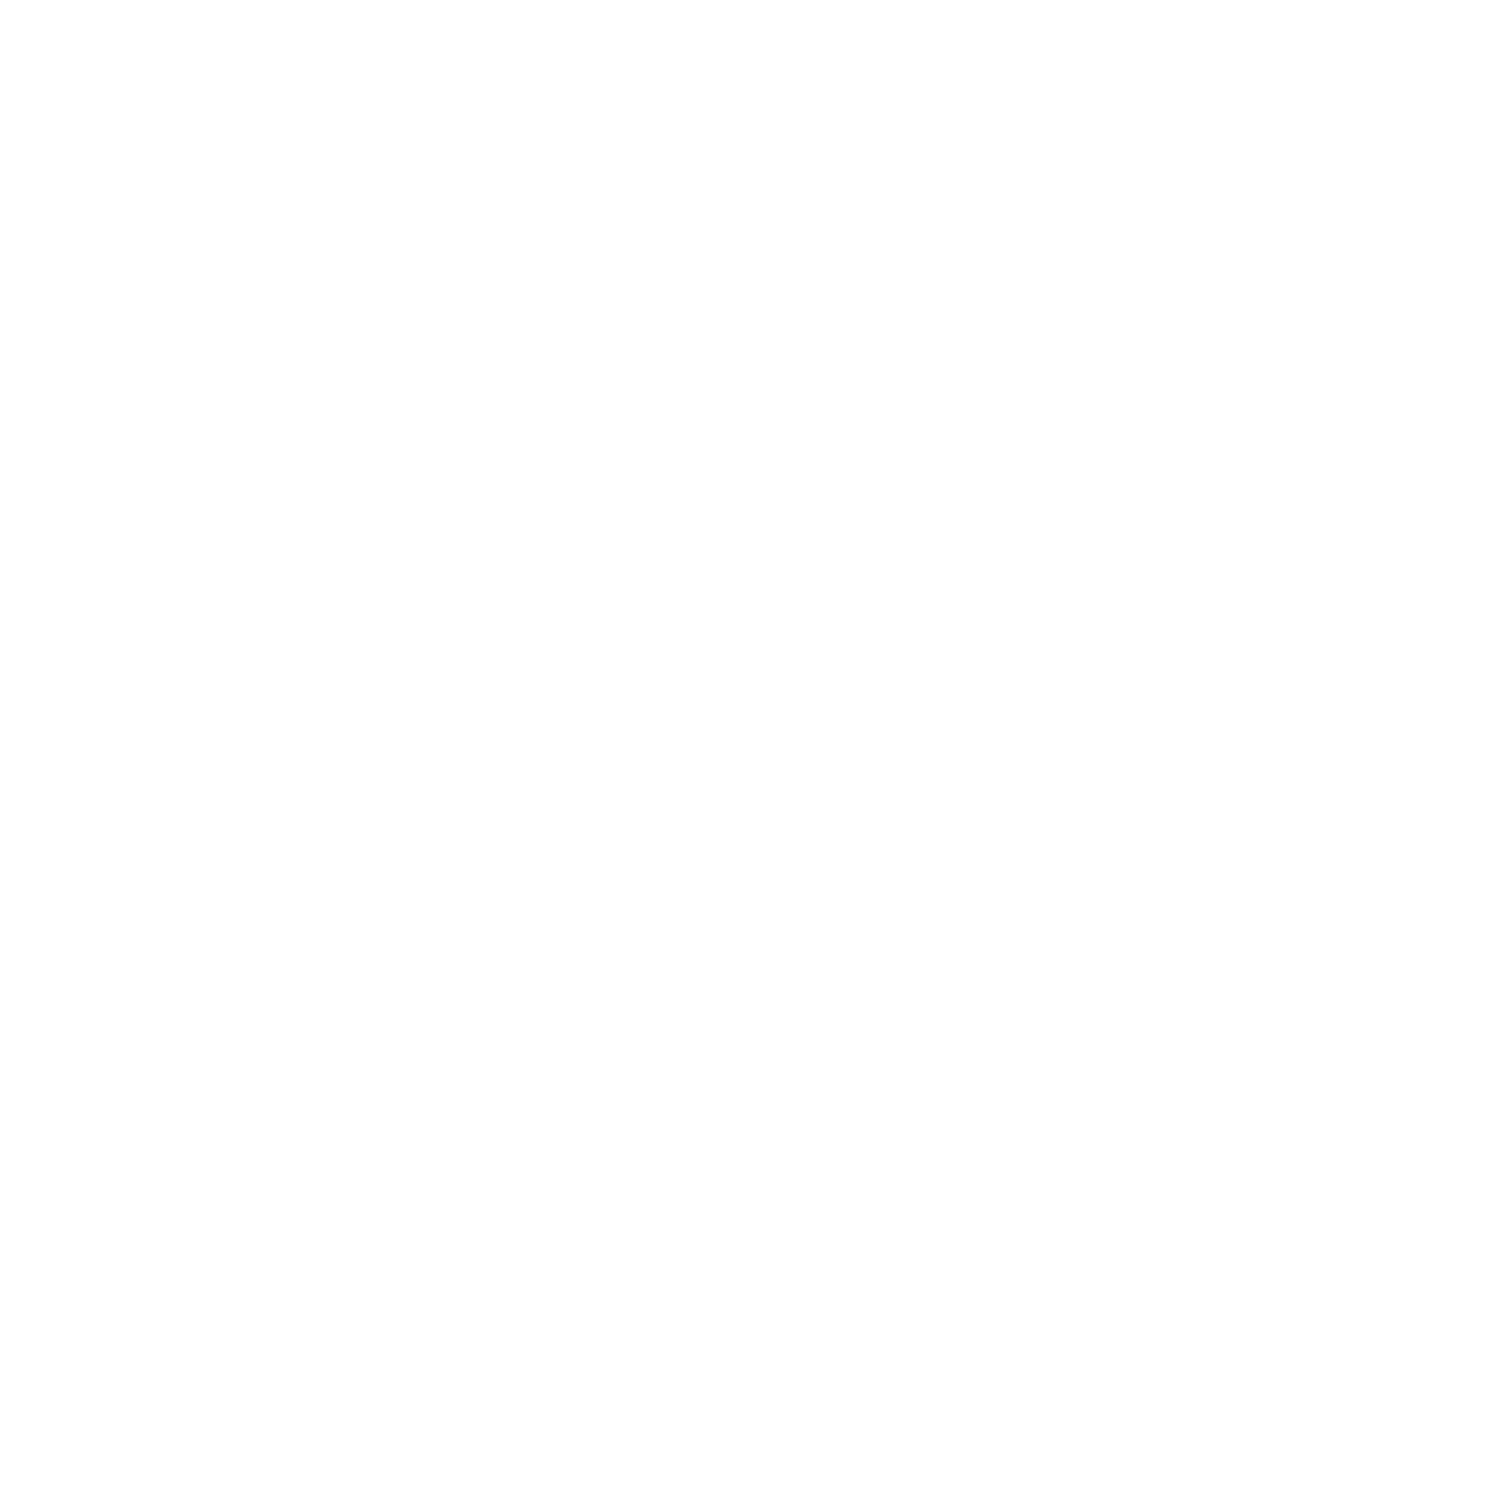 Caan Rose Estates Ltd - Slough : Letting agents in Brentford Greater London Hounslow